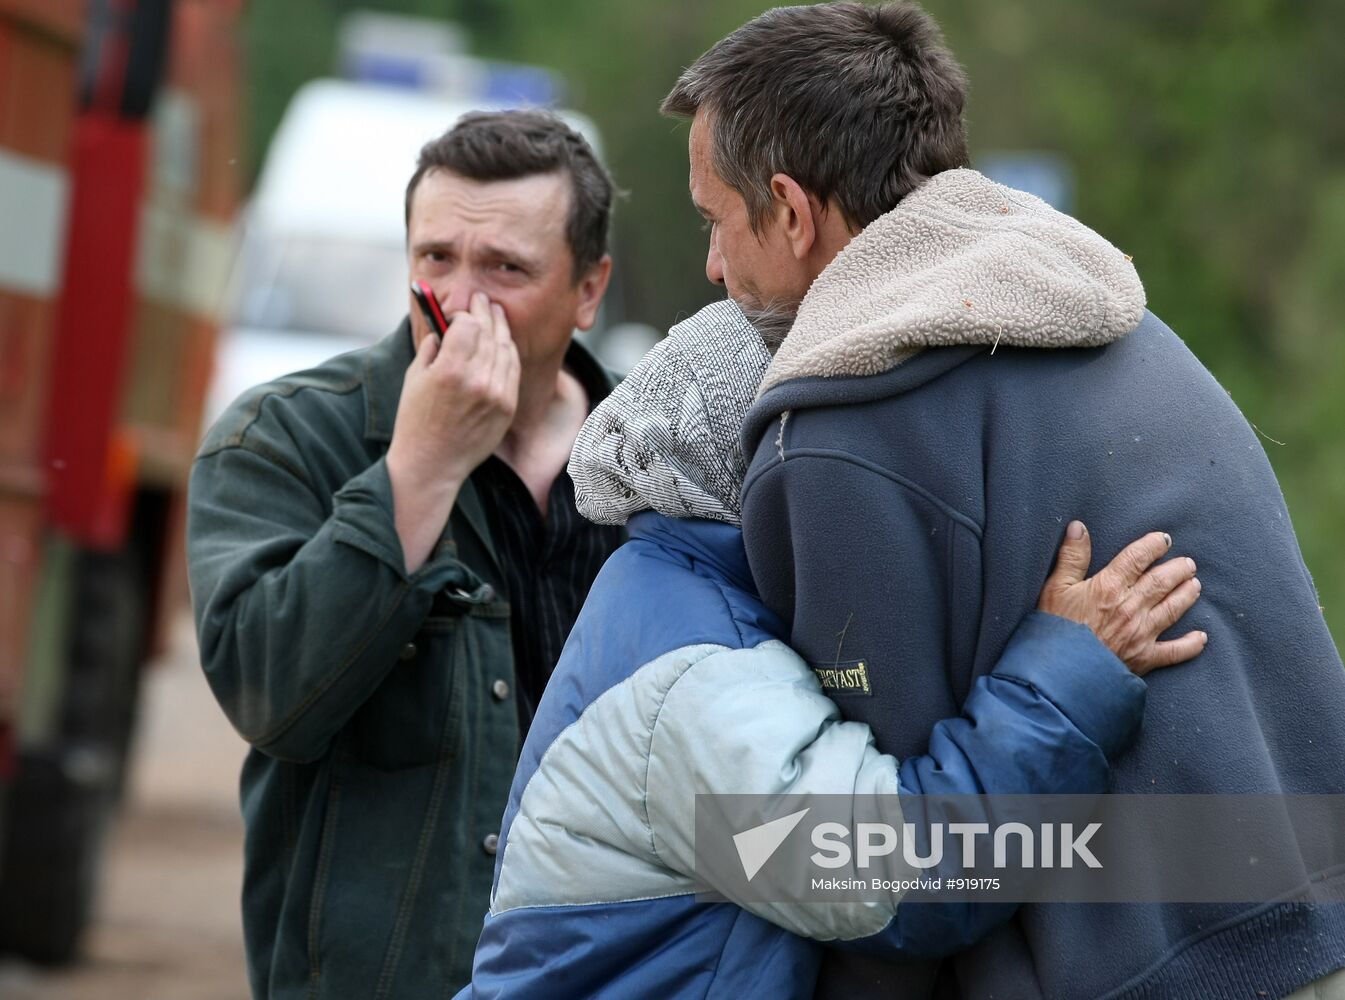 Pugachevo villager embraces her son